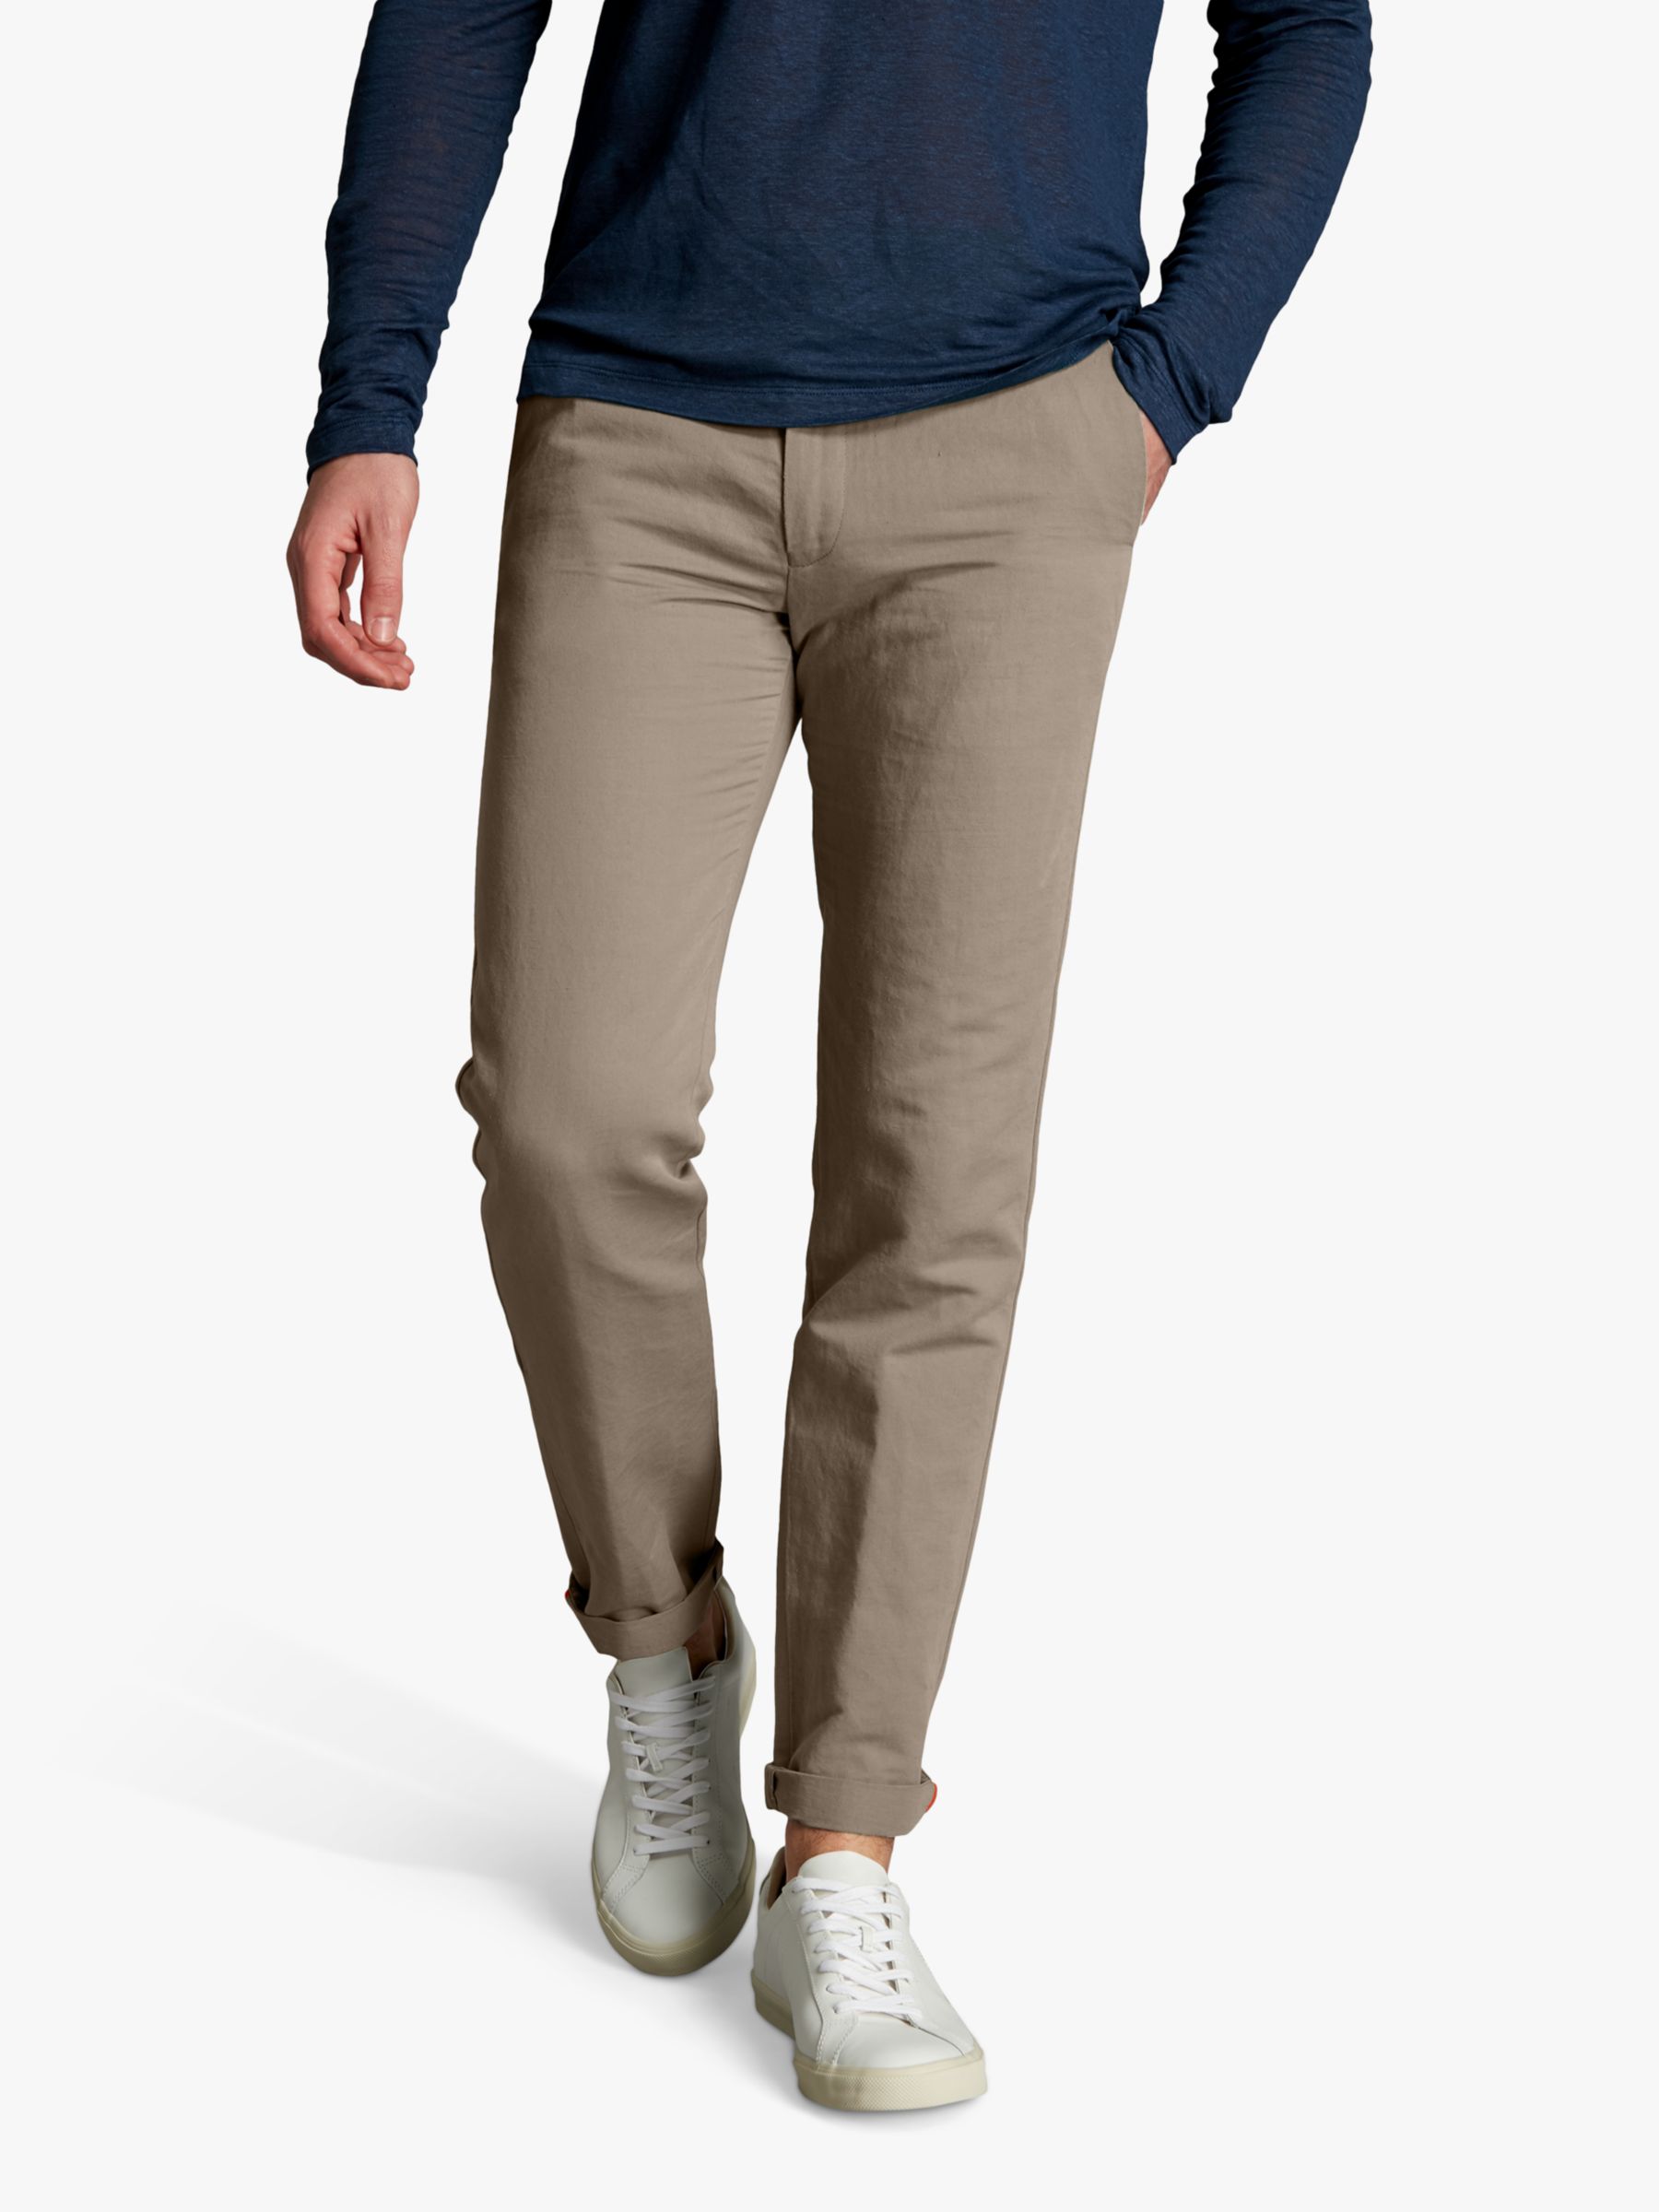 SPOKE Linen Sharps Broad Thigh Trousers, Hopsack, W30/L28